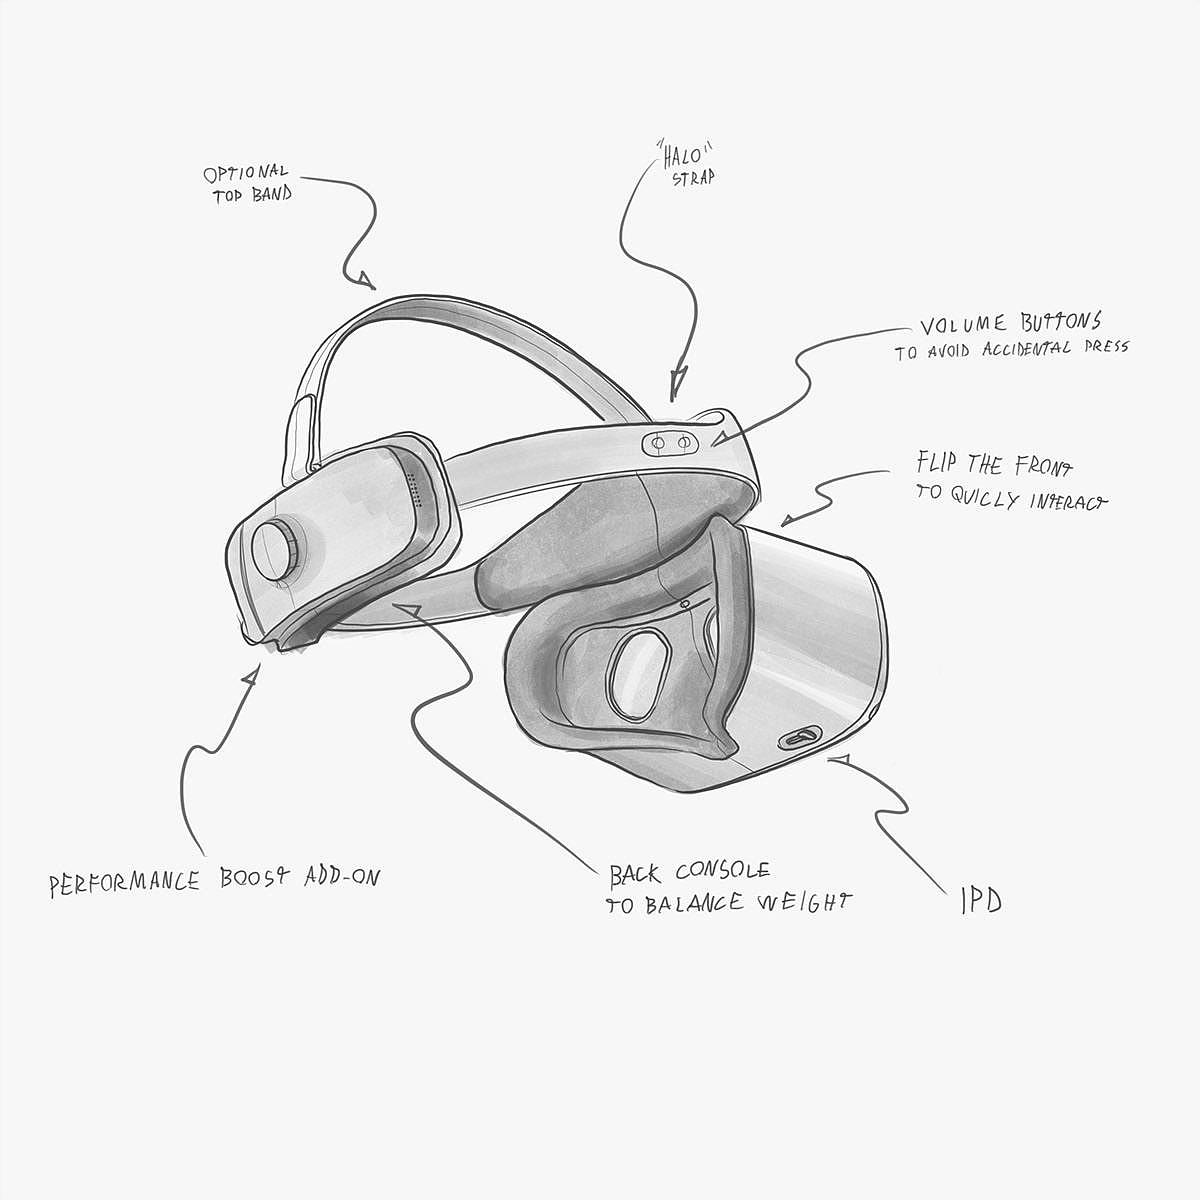 VR头盔，产品设计，外观设计，简约，